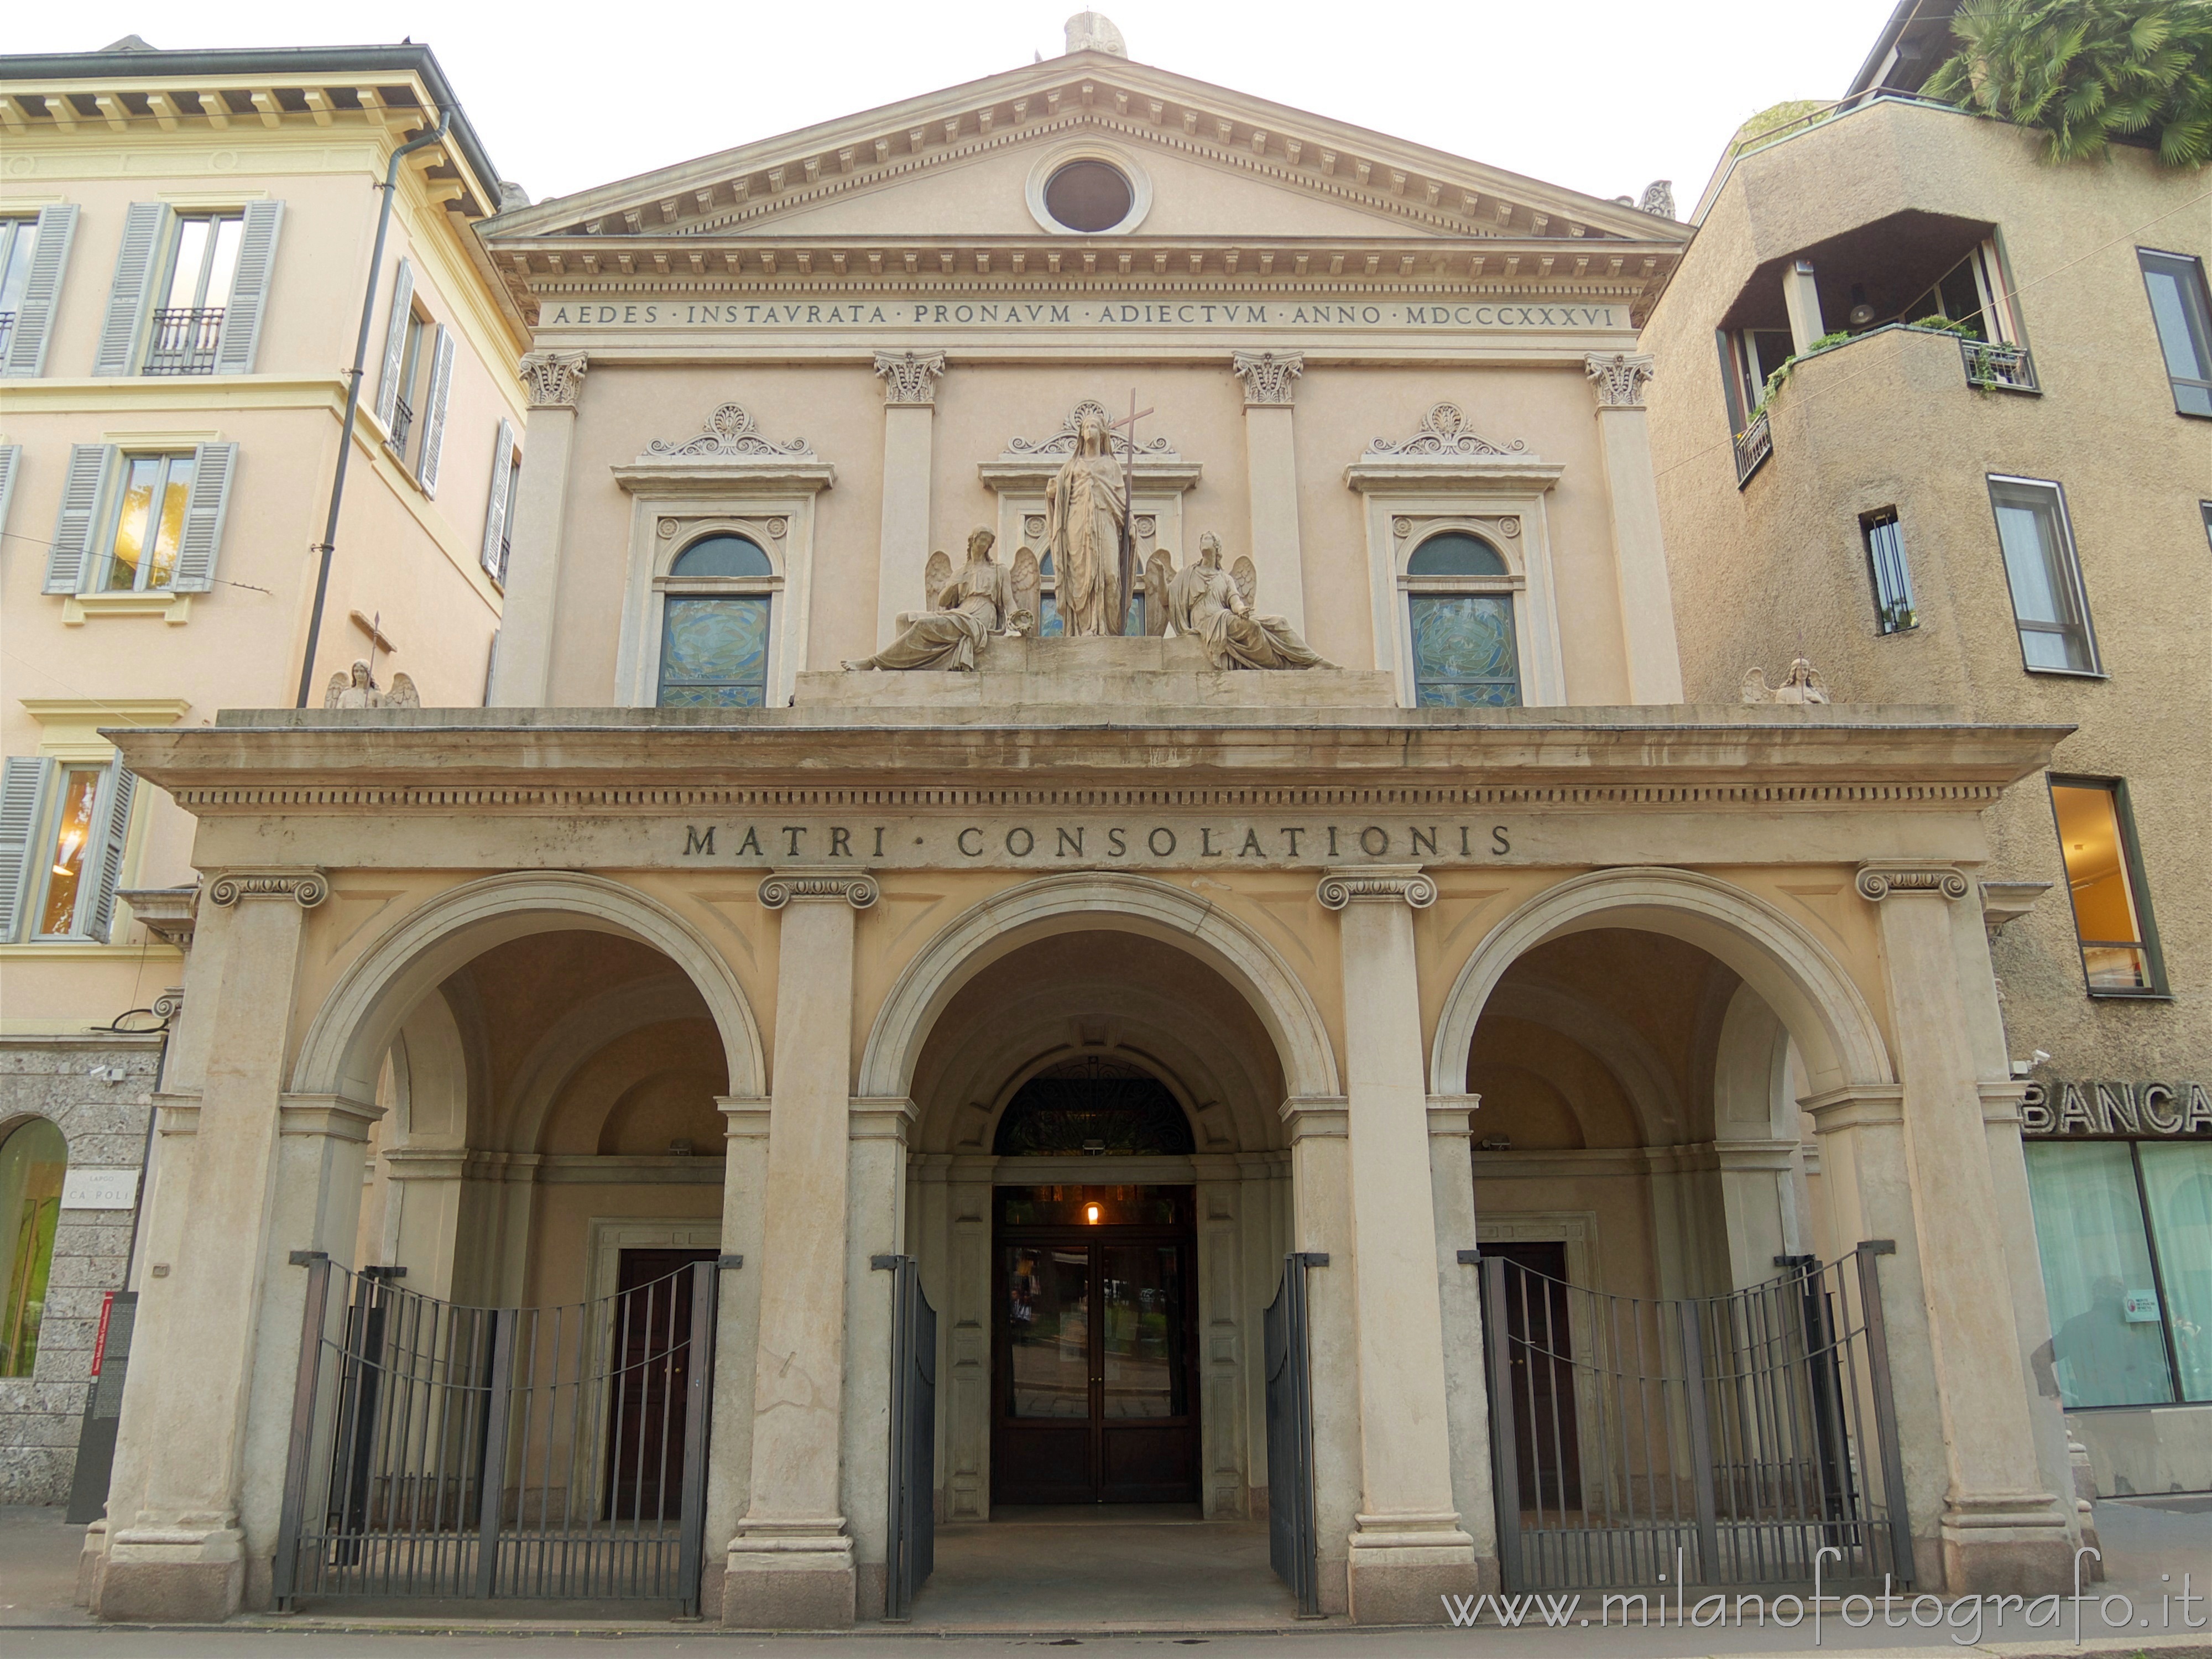 Milan (Italy): Facade of the Church of Santa Maria della Consolazione - Milan (Italy)